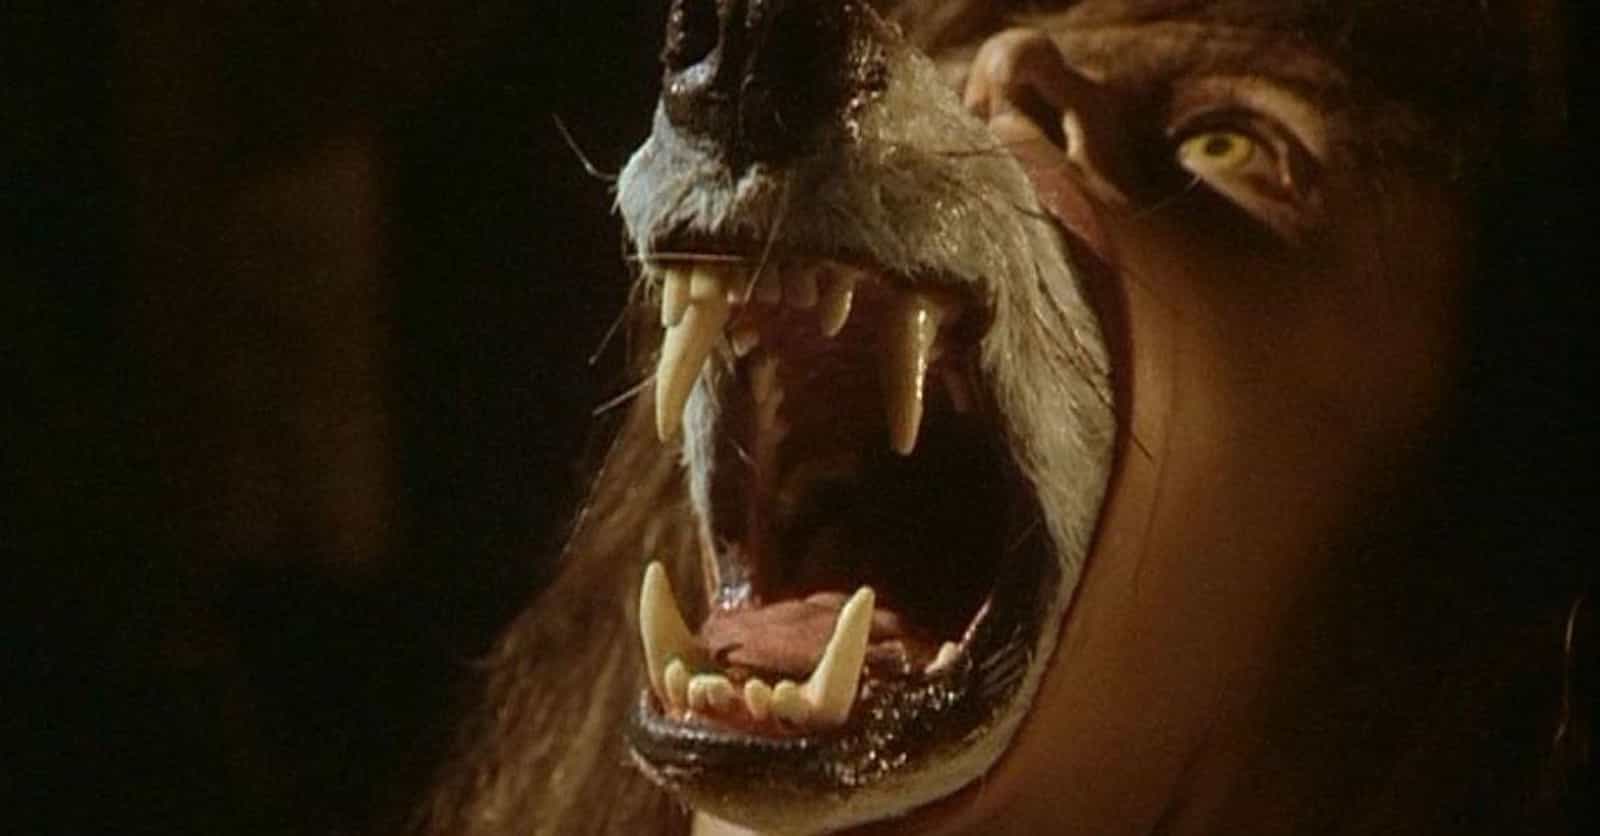 Werewolf Movies That Aren’t Really About Werewolves